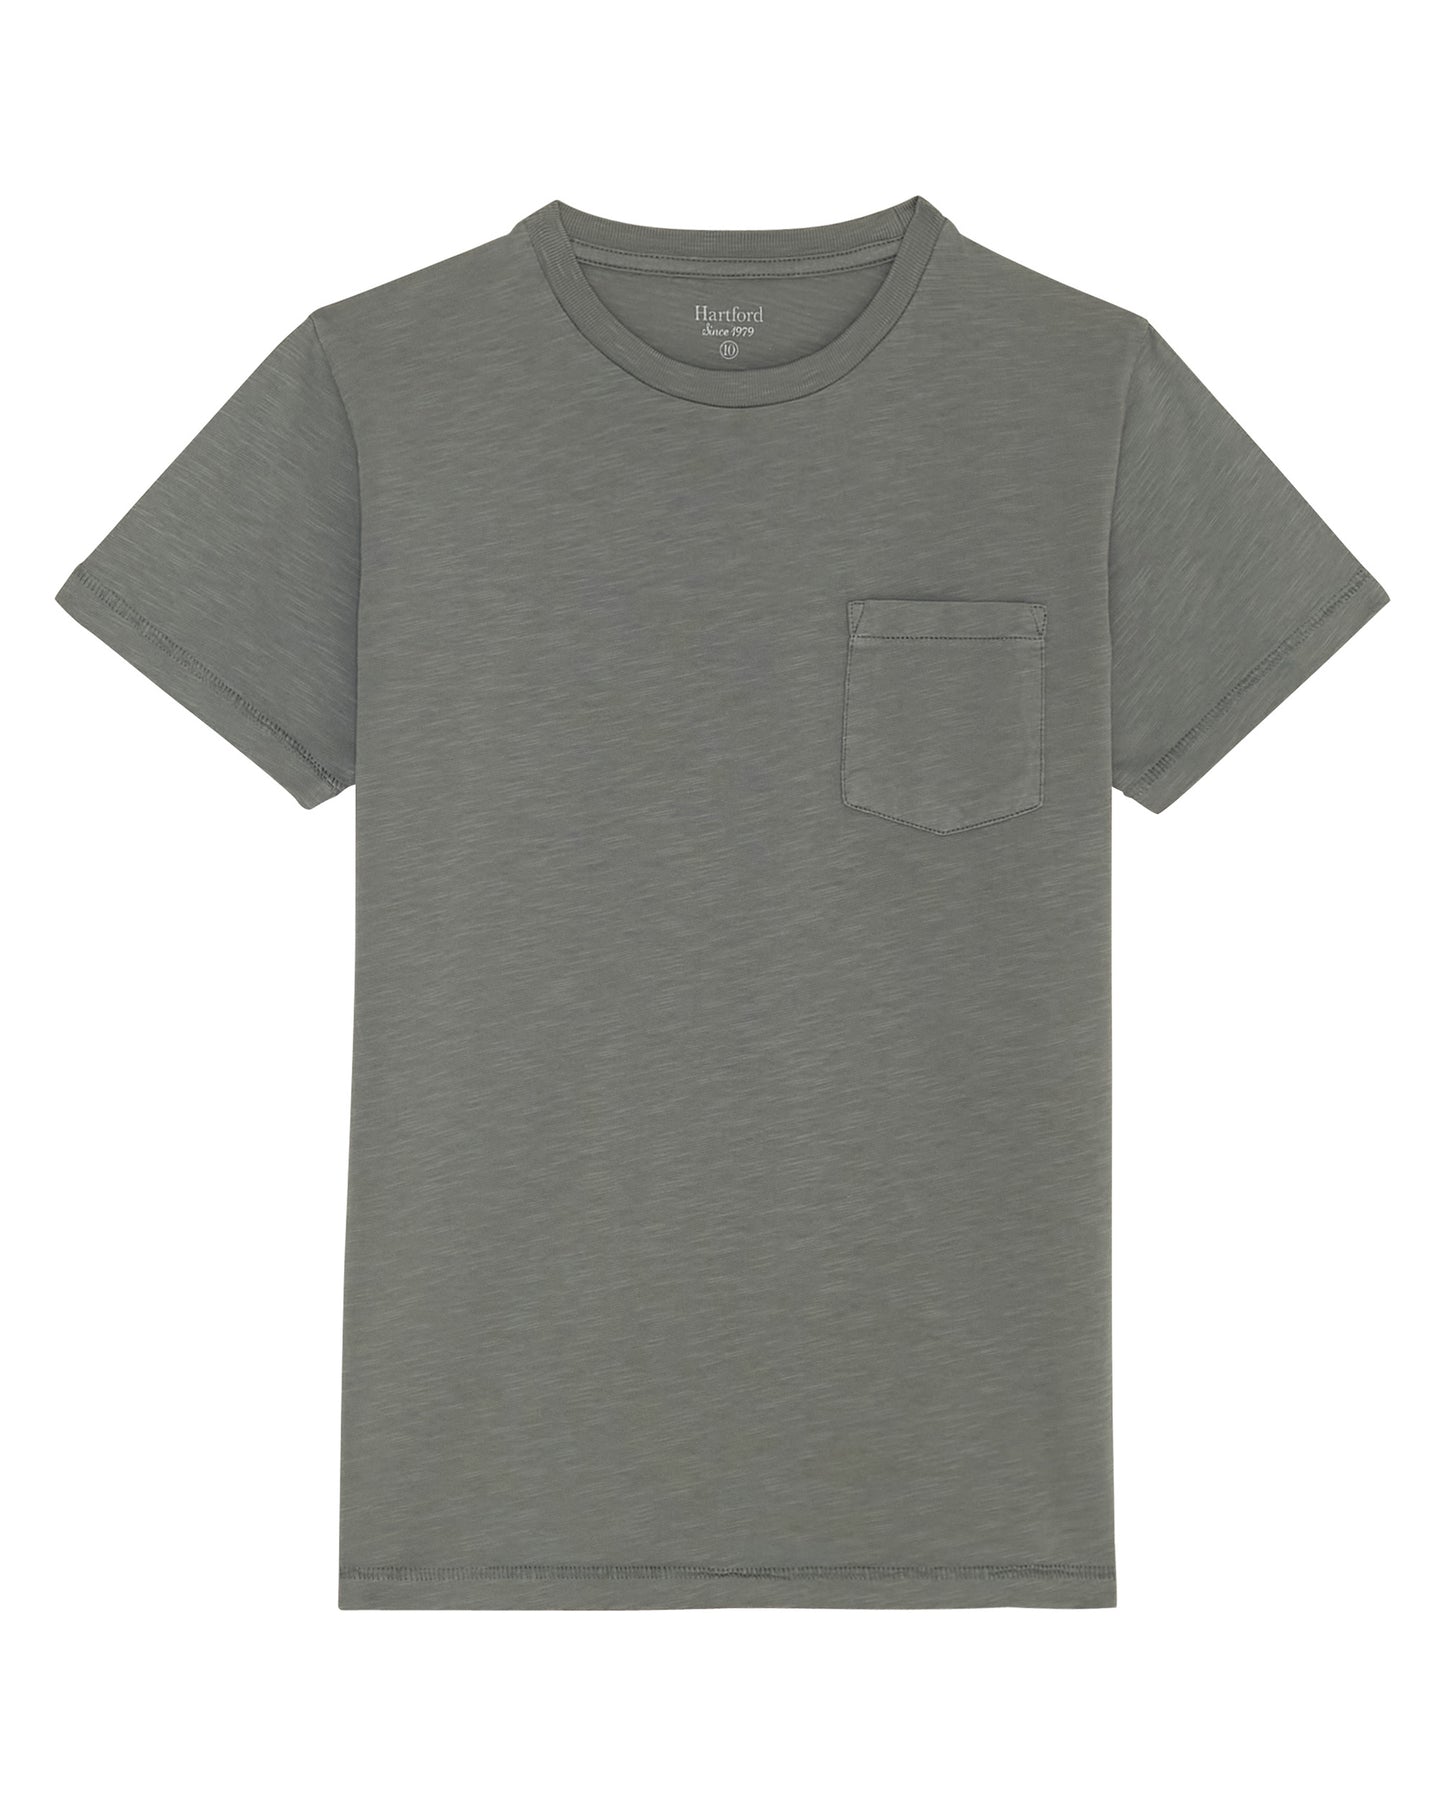 Boys' Olive Green Slub Jersey T-Shirt